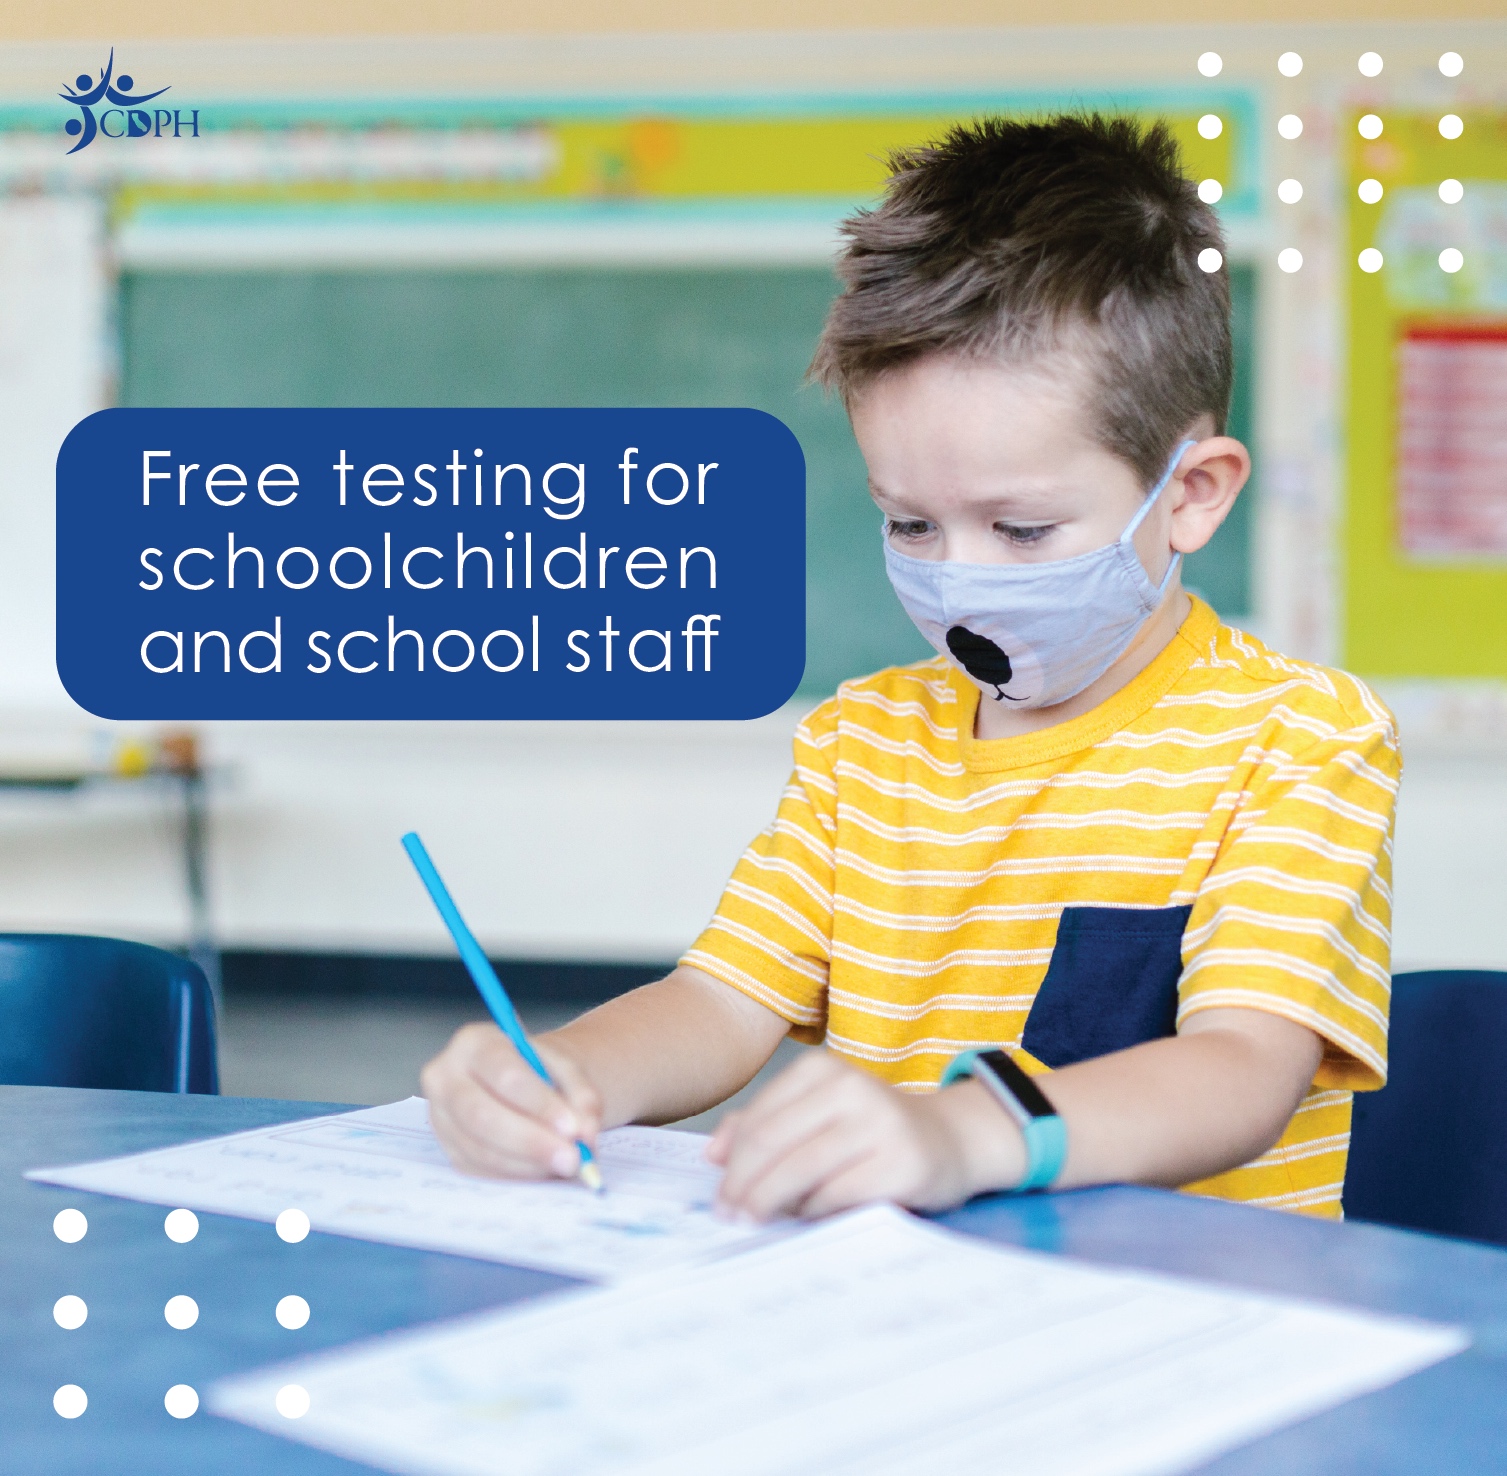 Free testing for schoolchildren and school staff